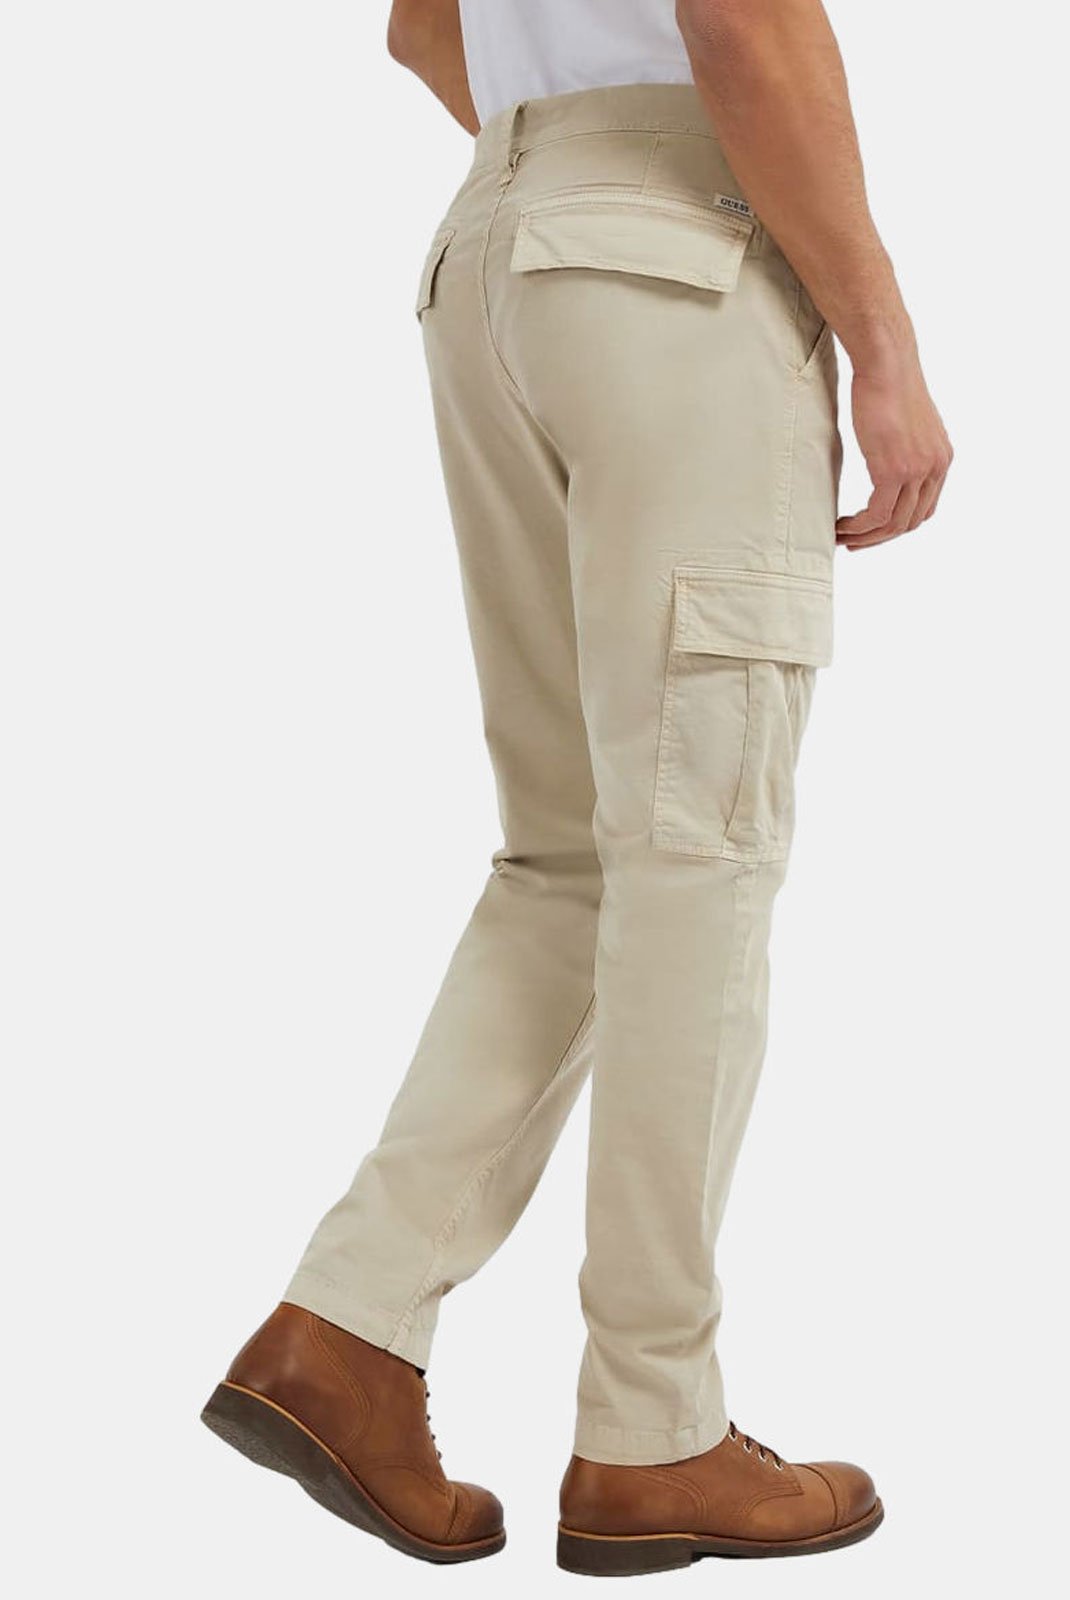 Pantalons sport/streetwear  Guess jeans M3YB17 WFIO3 G1V7 RESORT SAND 